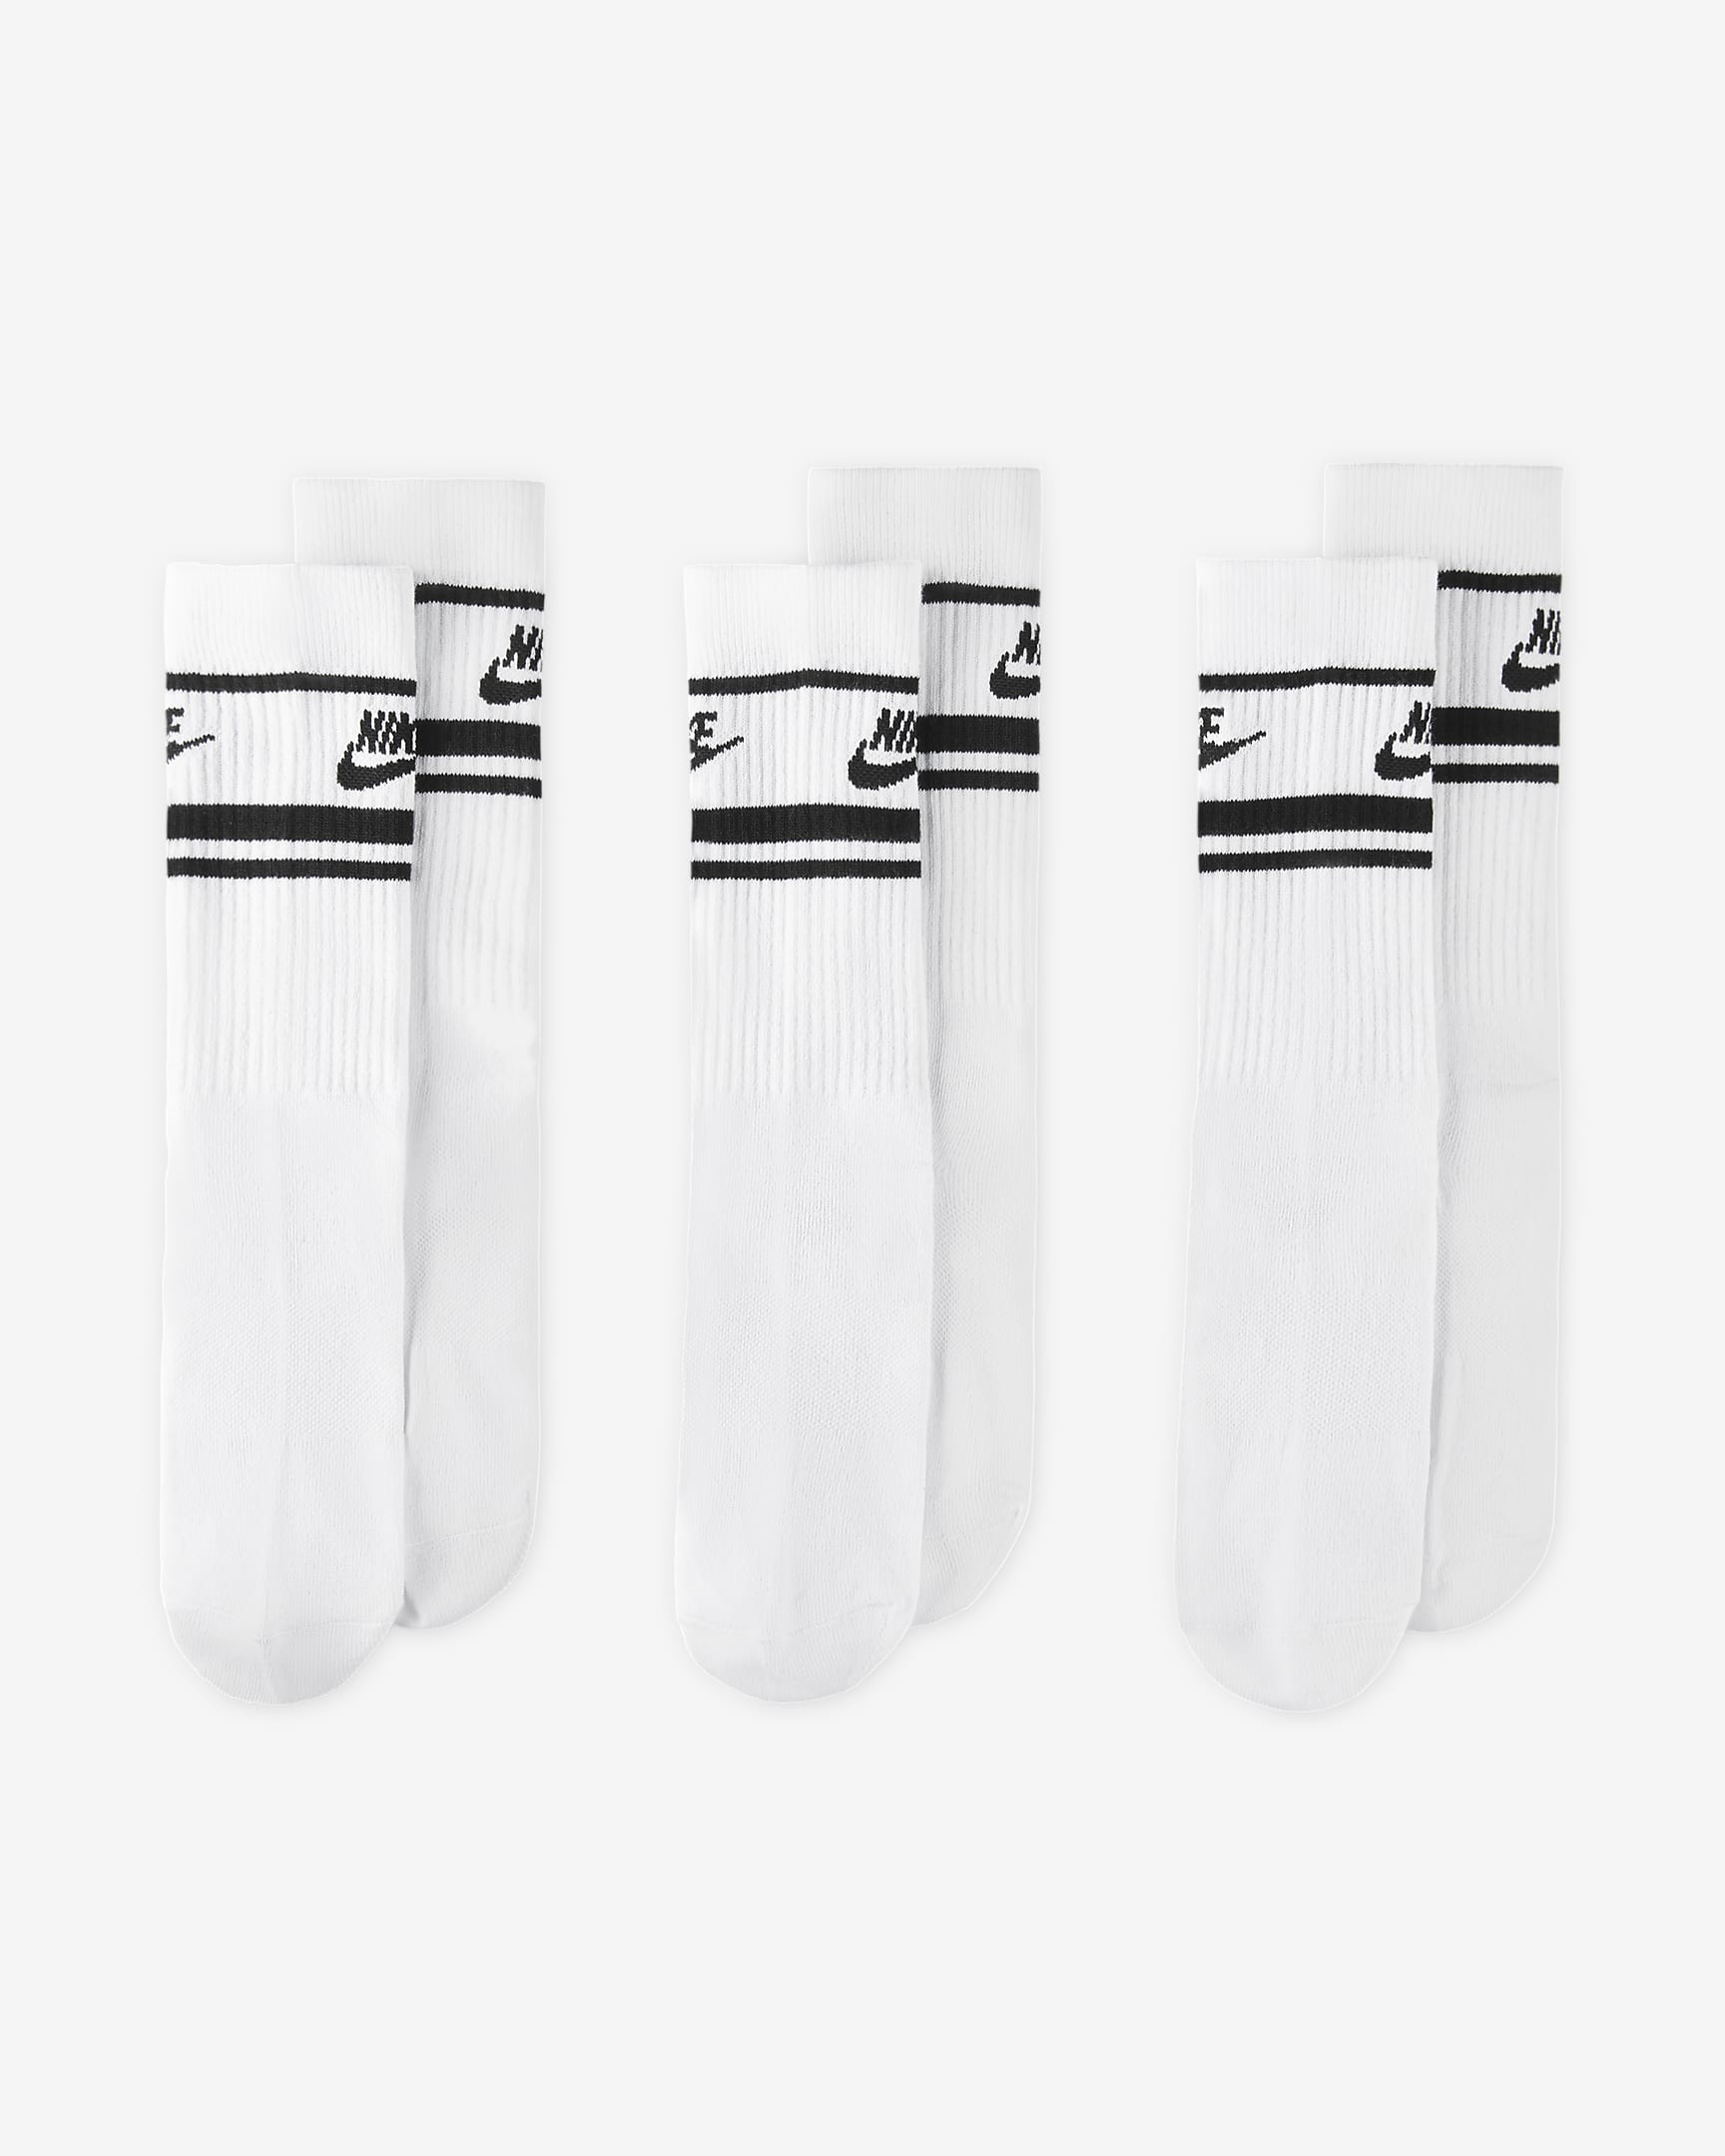 Nike Sportswear Dri-FIT Everyday Essential Calcetines largos (3 pares) - Blanco/Negro/Negro